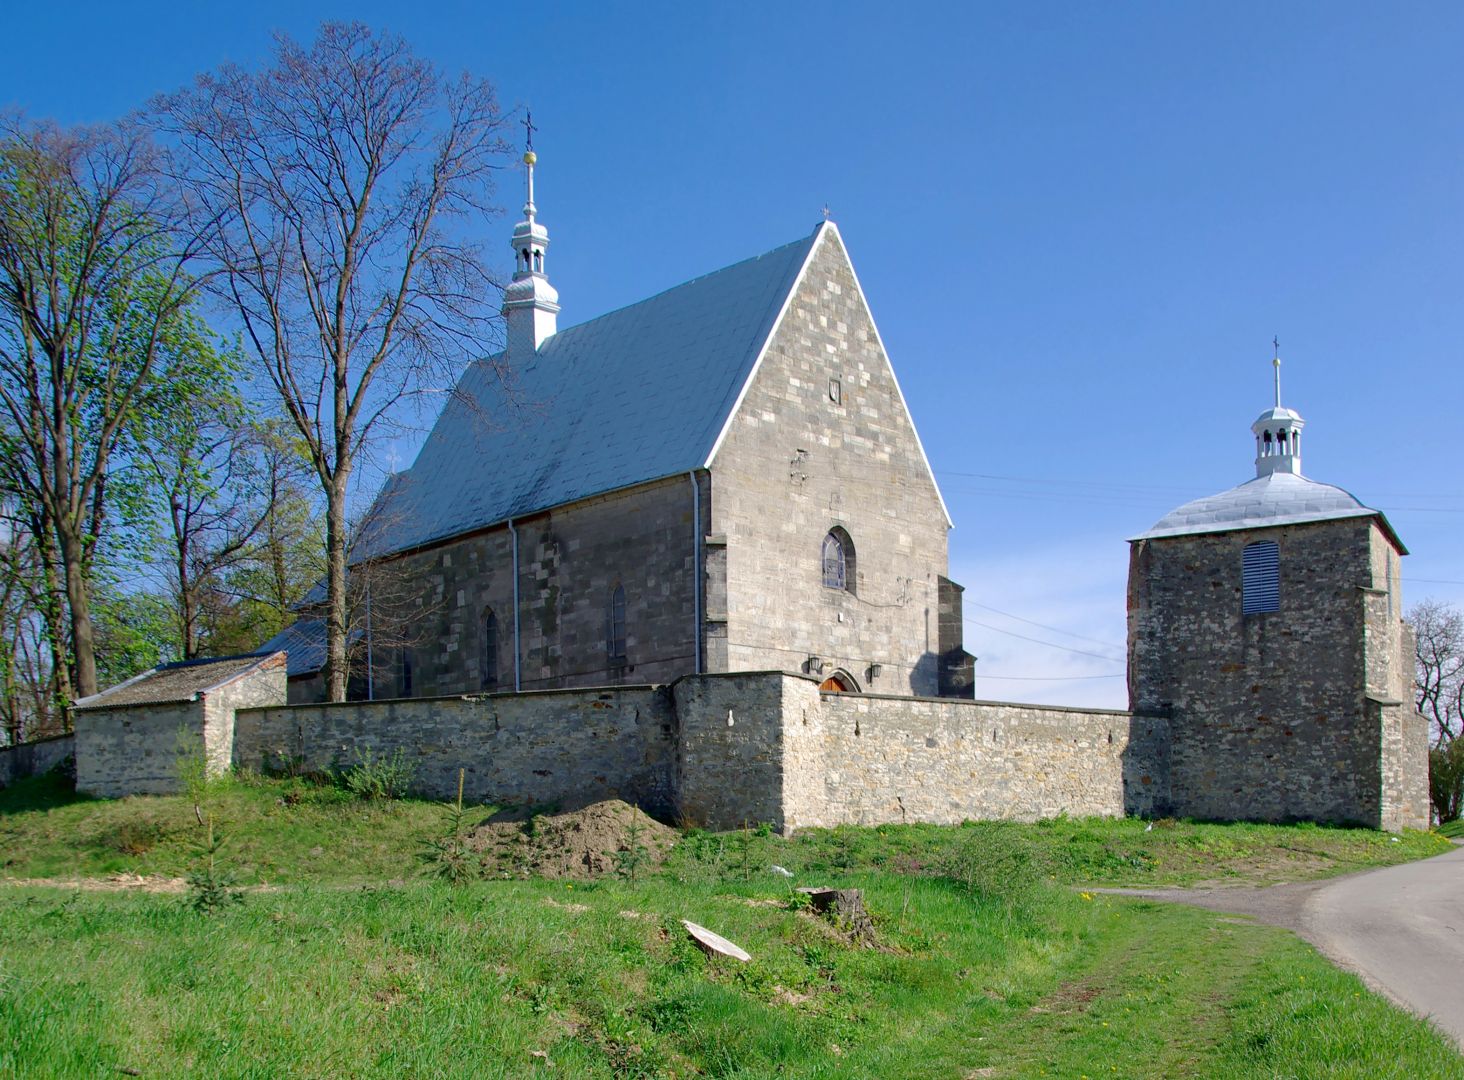 The church Idzi in Ptkanów